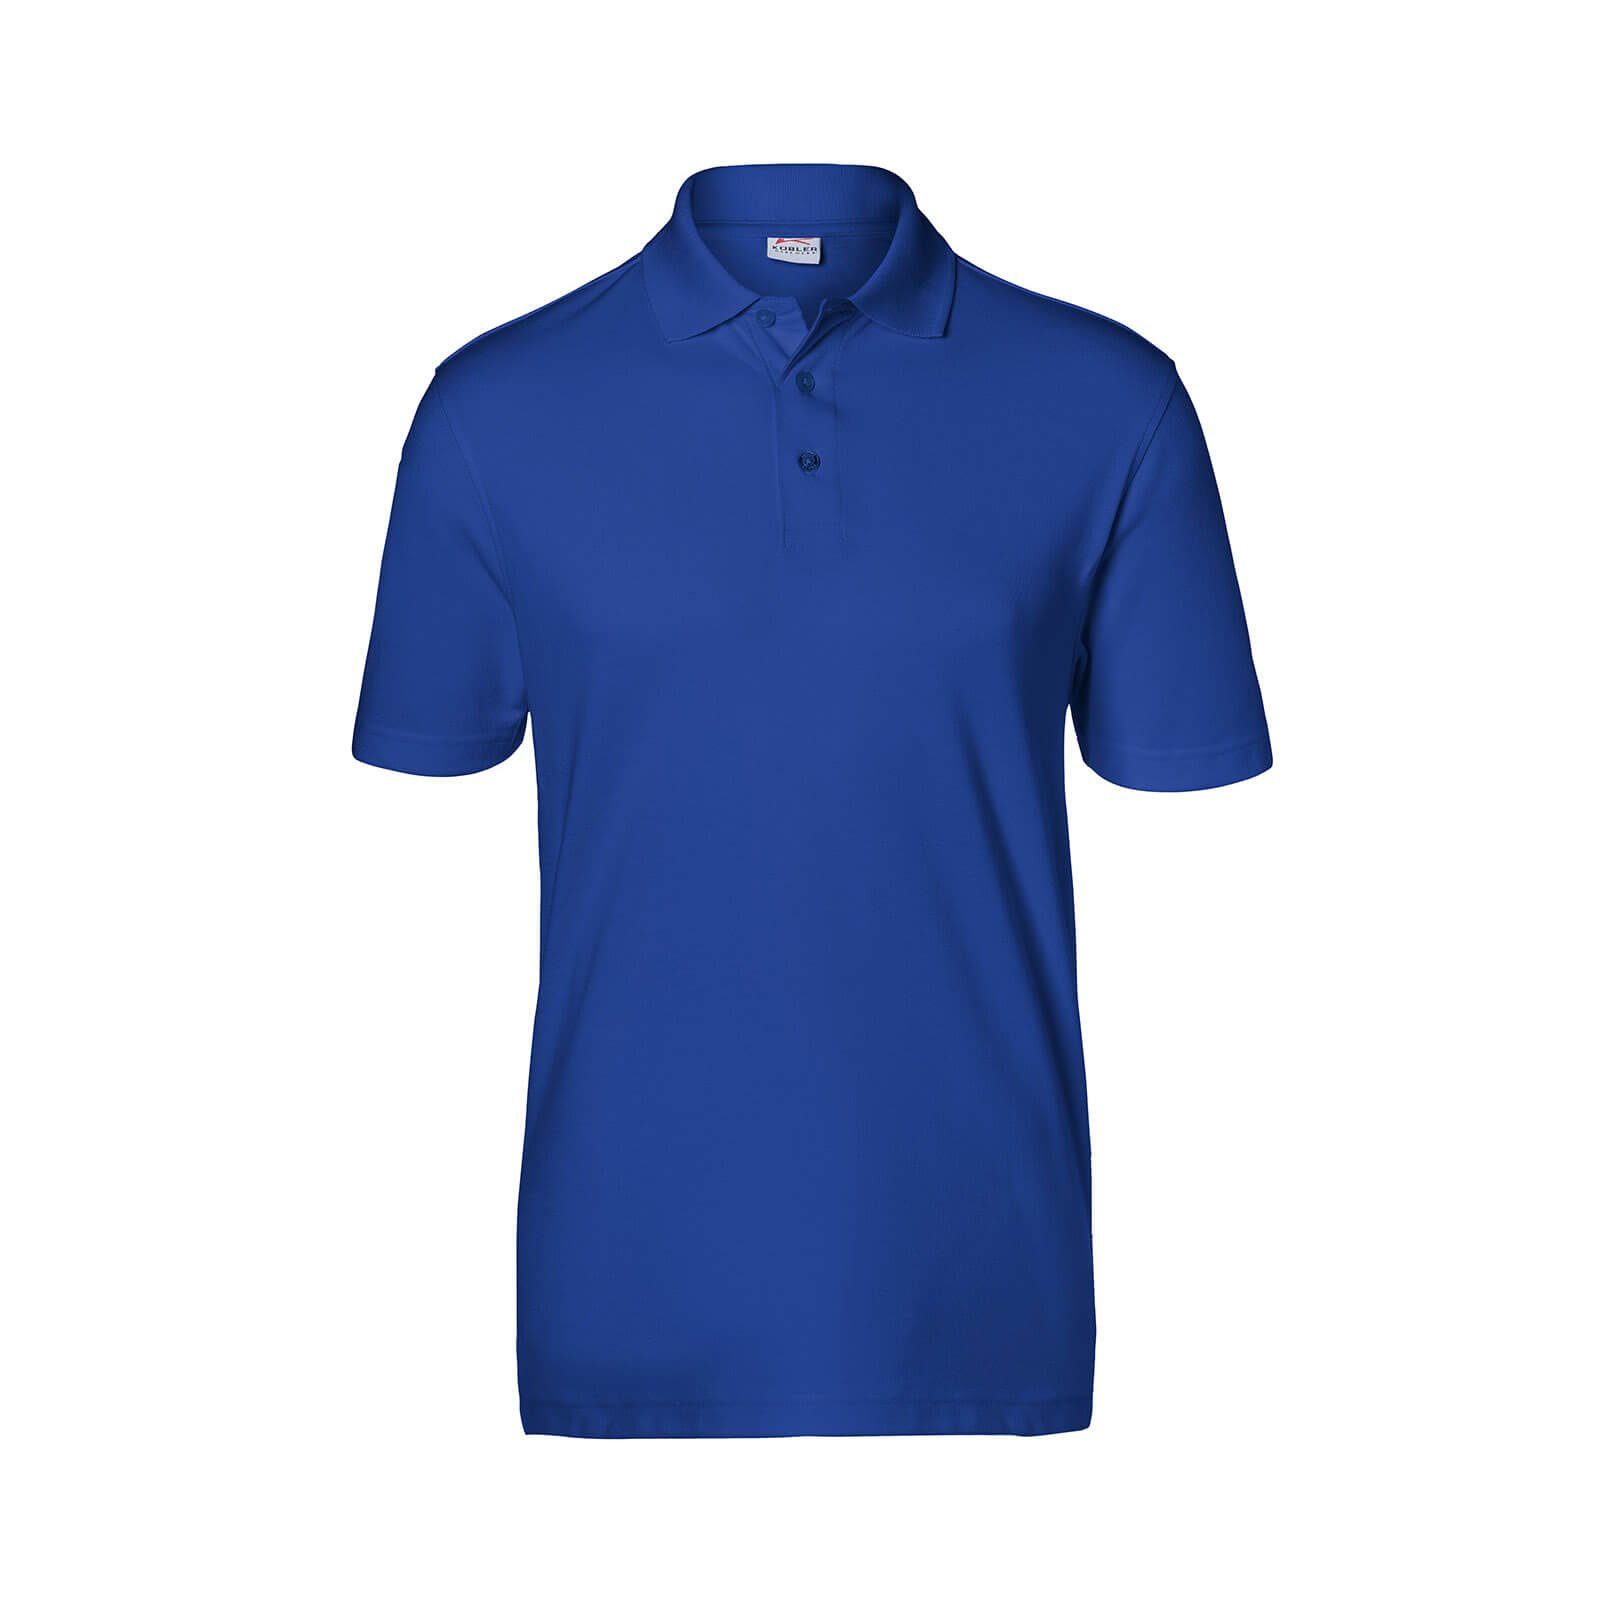 Kübler T-Shirt Kübler Shirts Polo kbl.blau